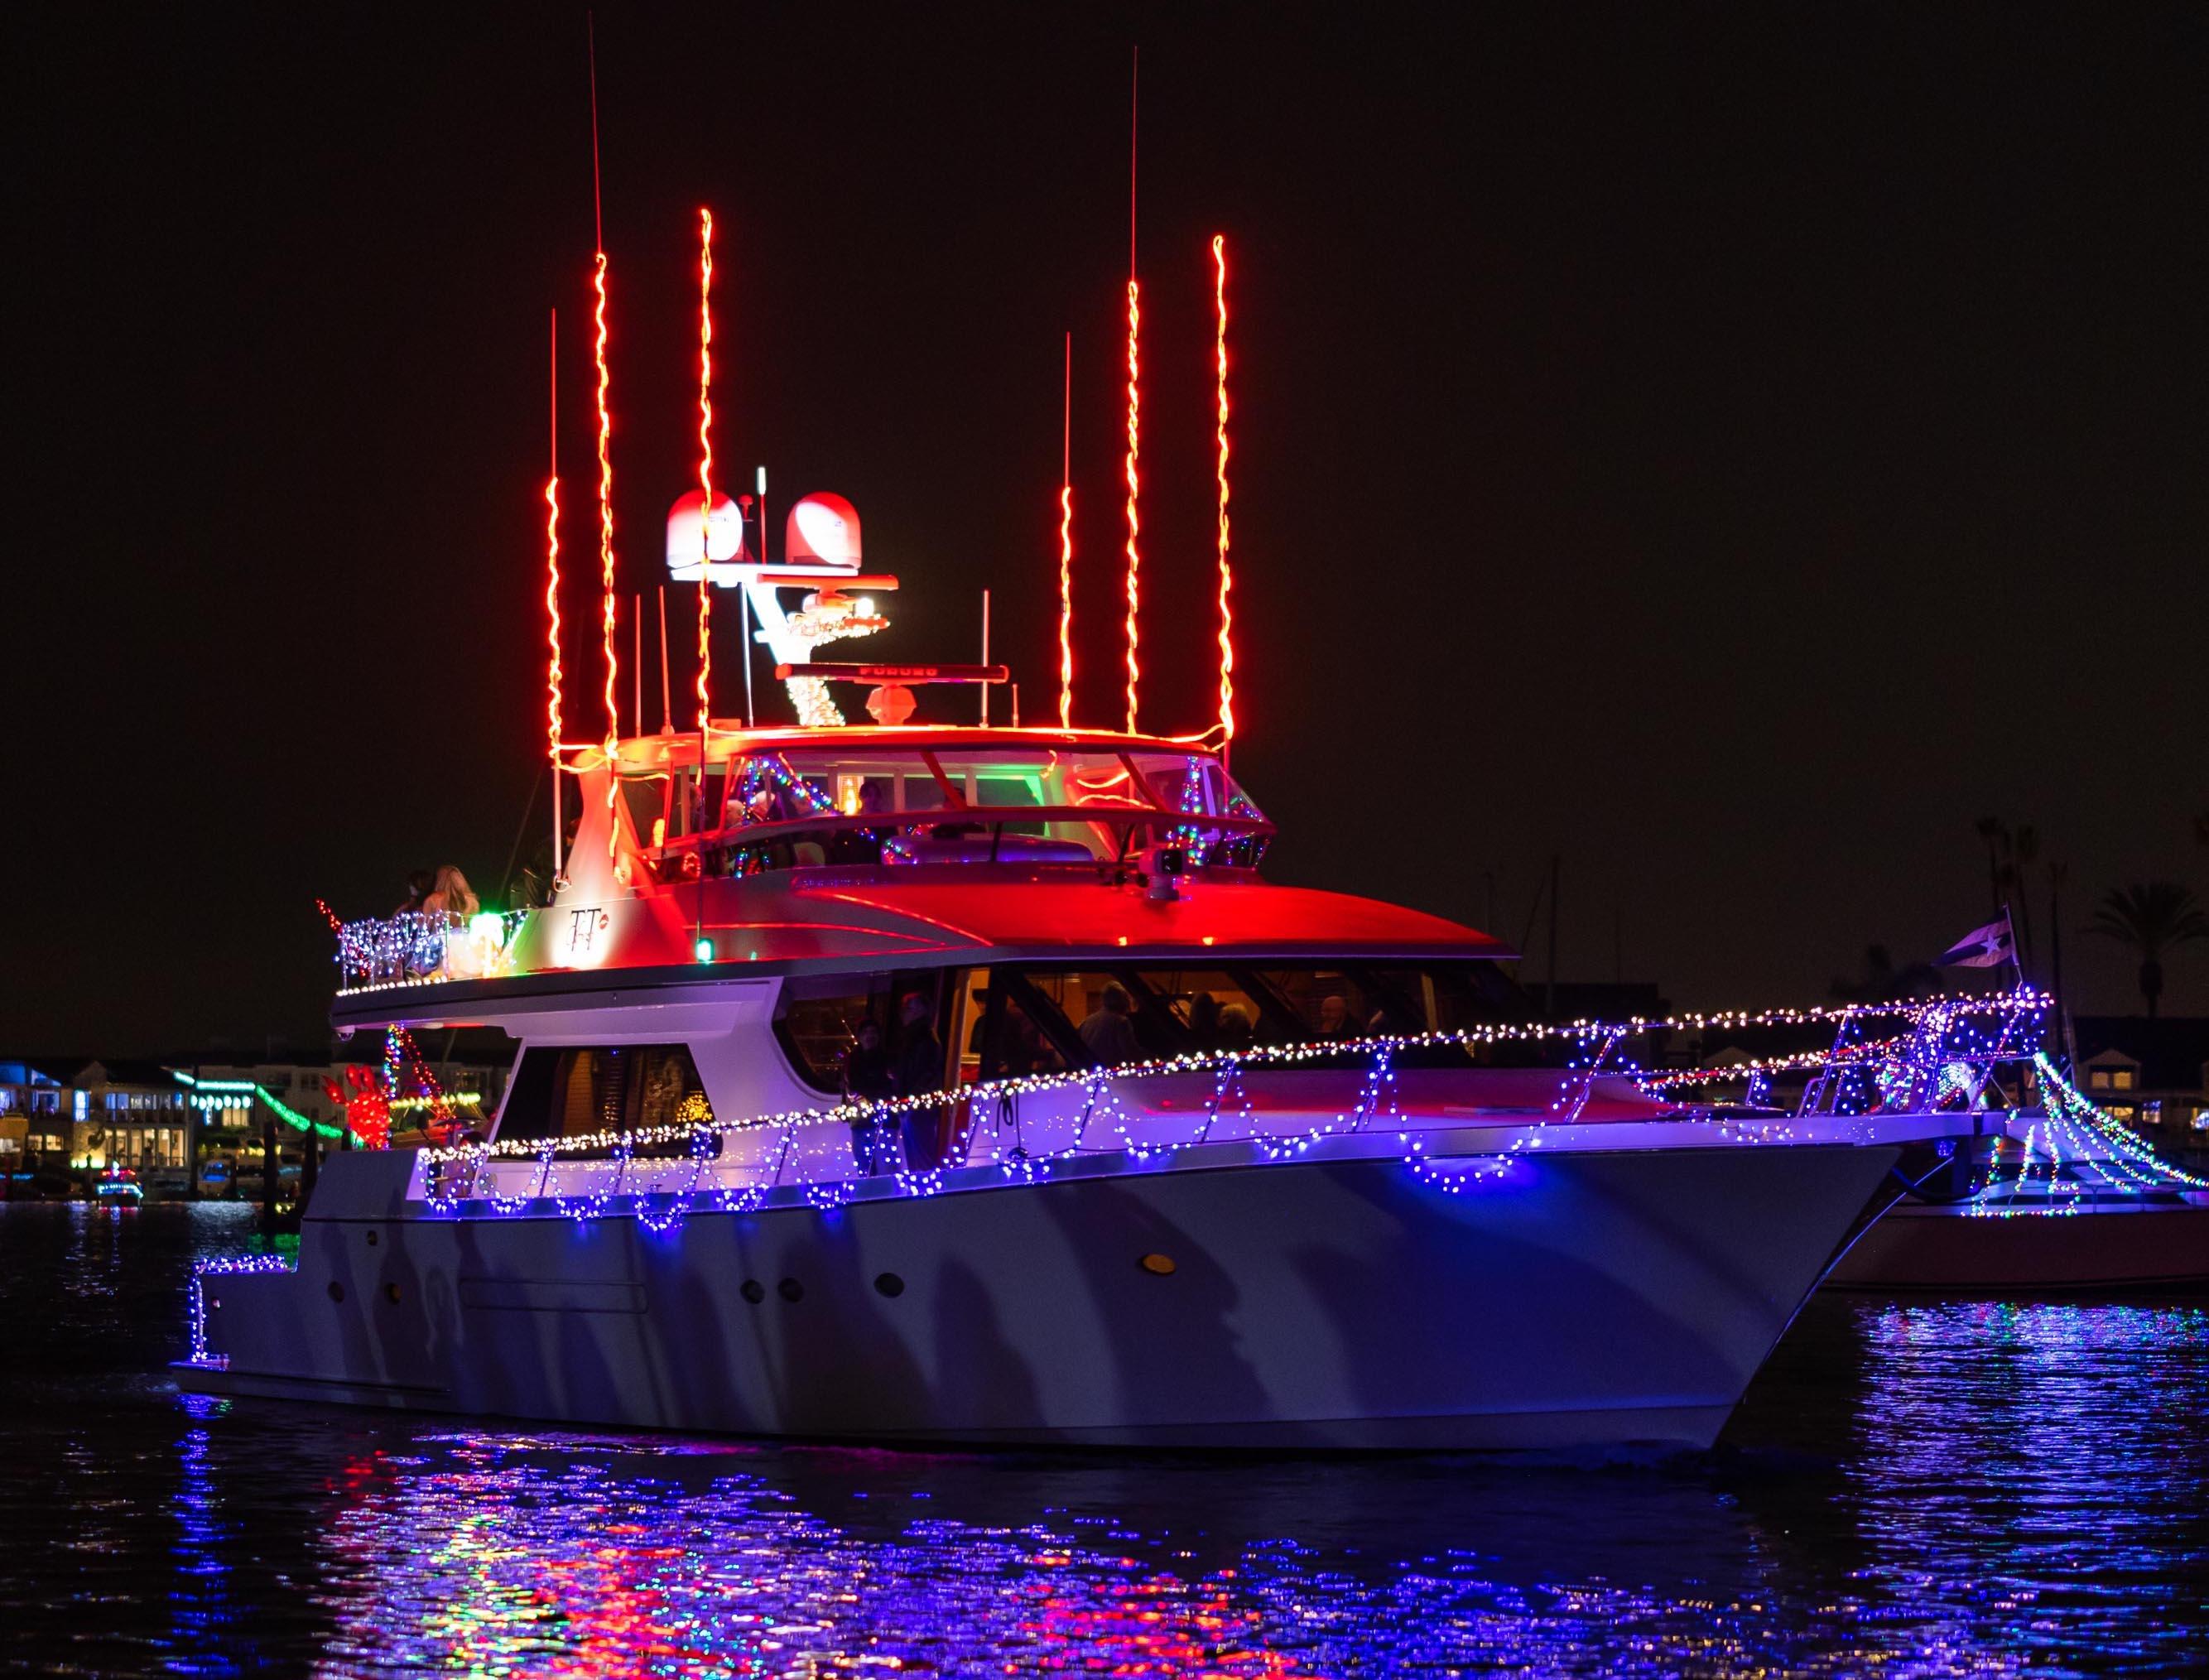 Annual Newport Beach Christmas Boat Parade a Hallmark of the Holidays